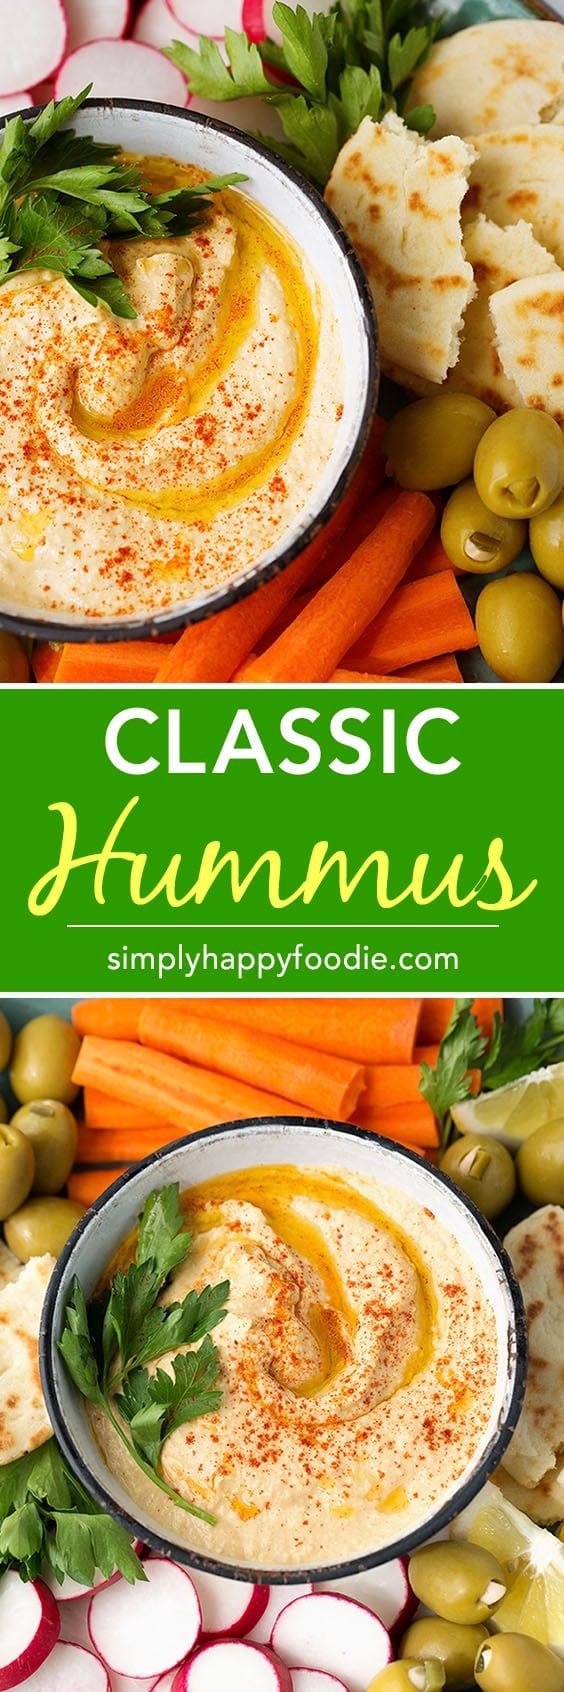 A Classic Hummus recipe with a lemony garlic flavor. This hummus recipe is great on pita bread, chips, veggies, wraps. simplyhappyfoodie.com #hummus #hummusrecipe #besthummus